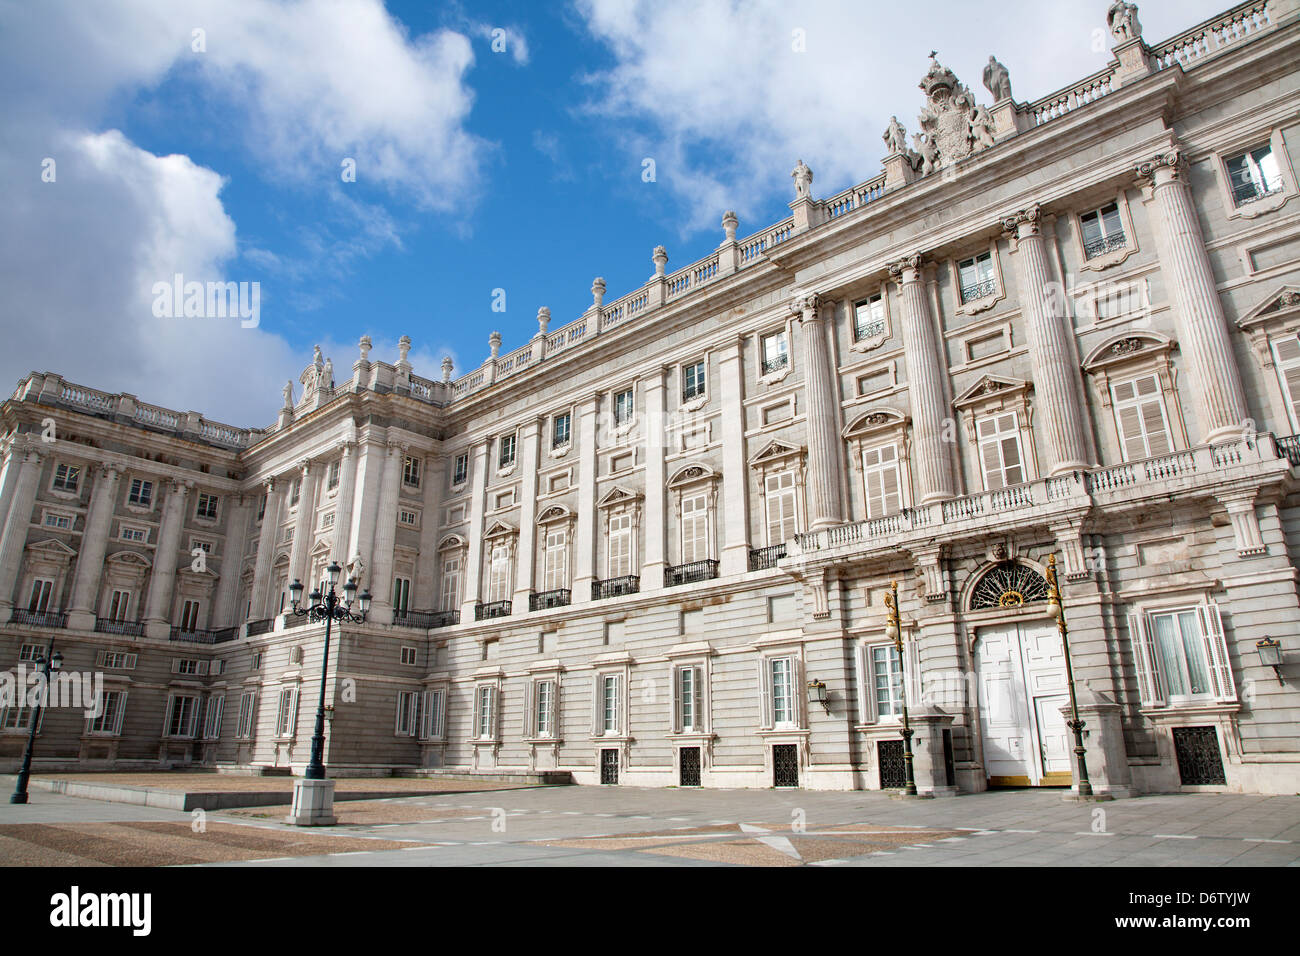 MADRID - MARCH 10: North - east facade of Palacio Real or Royal palace Stock Photo